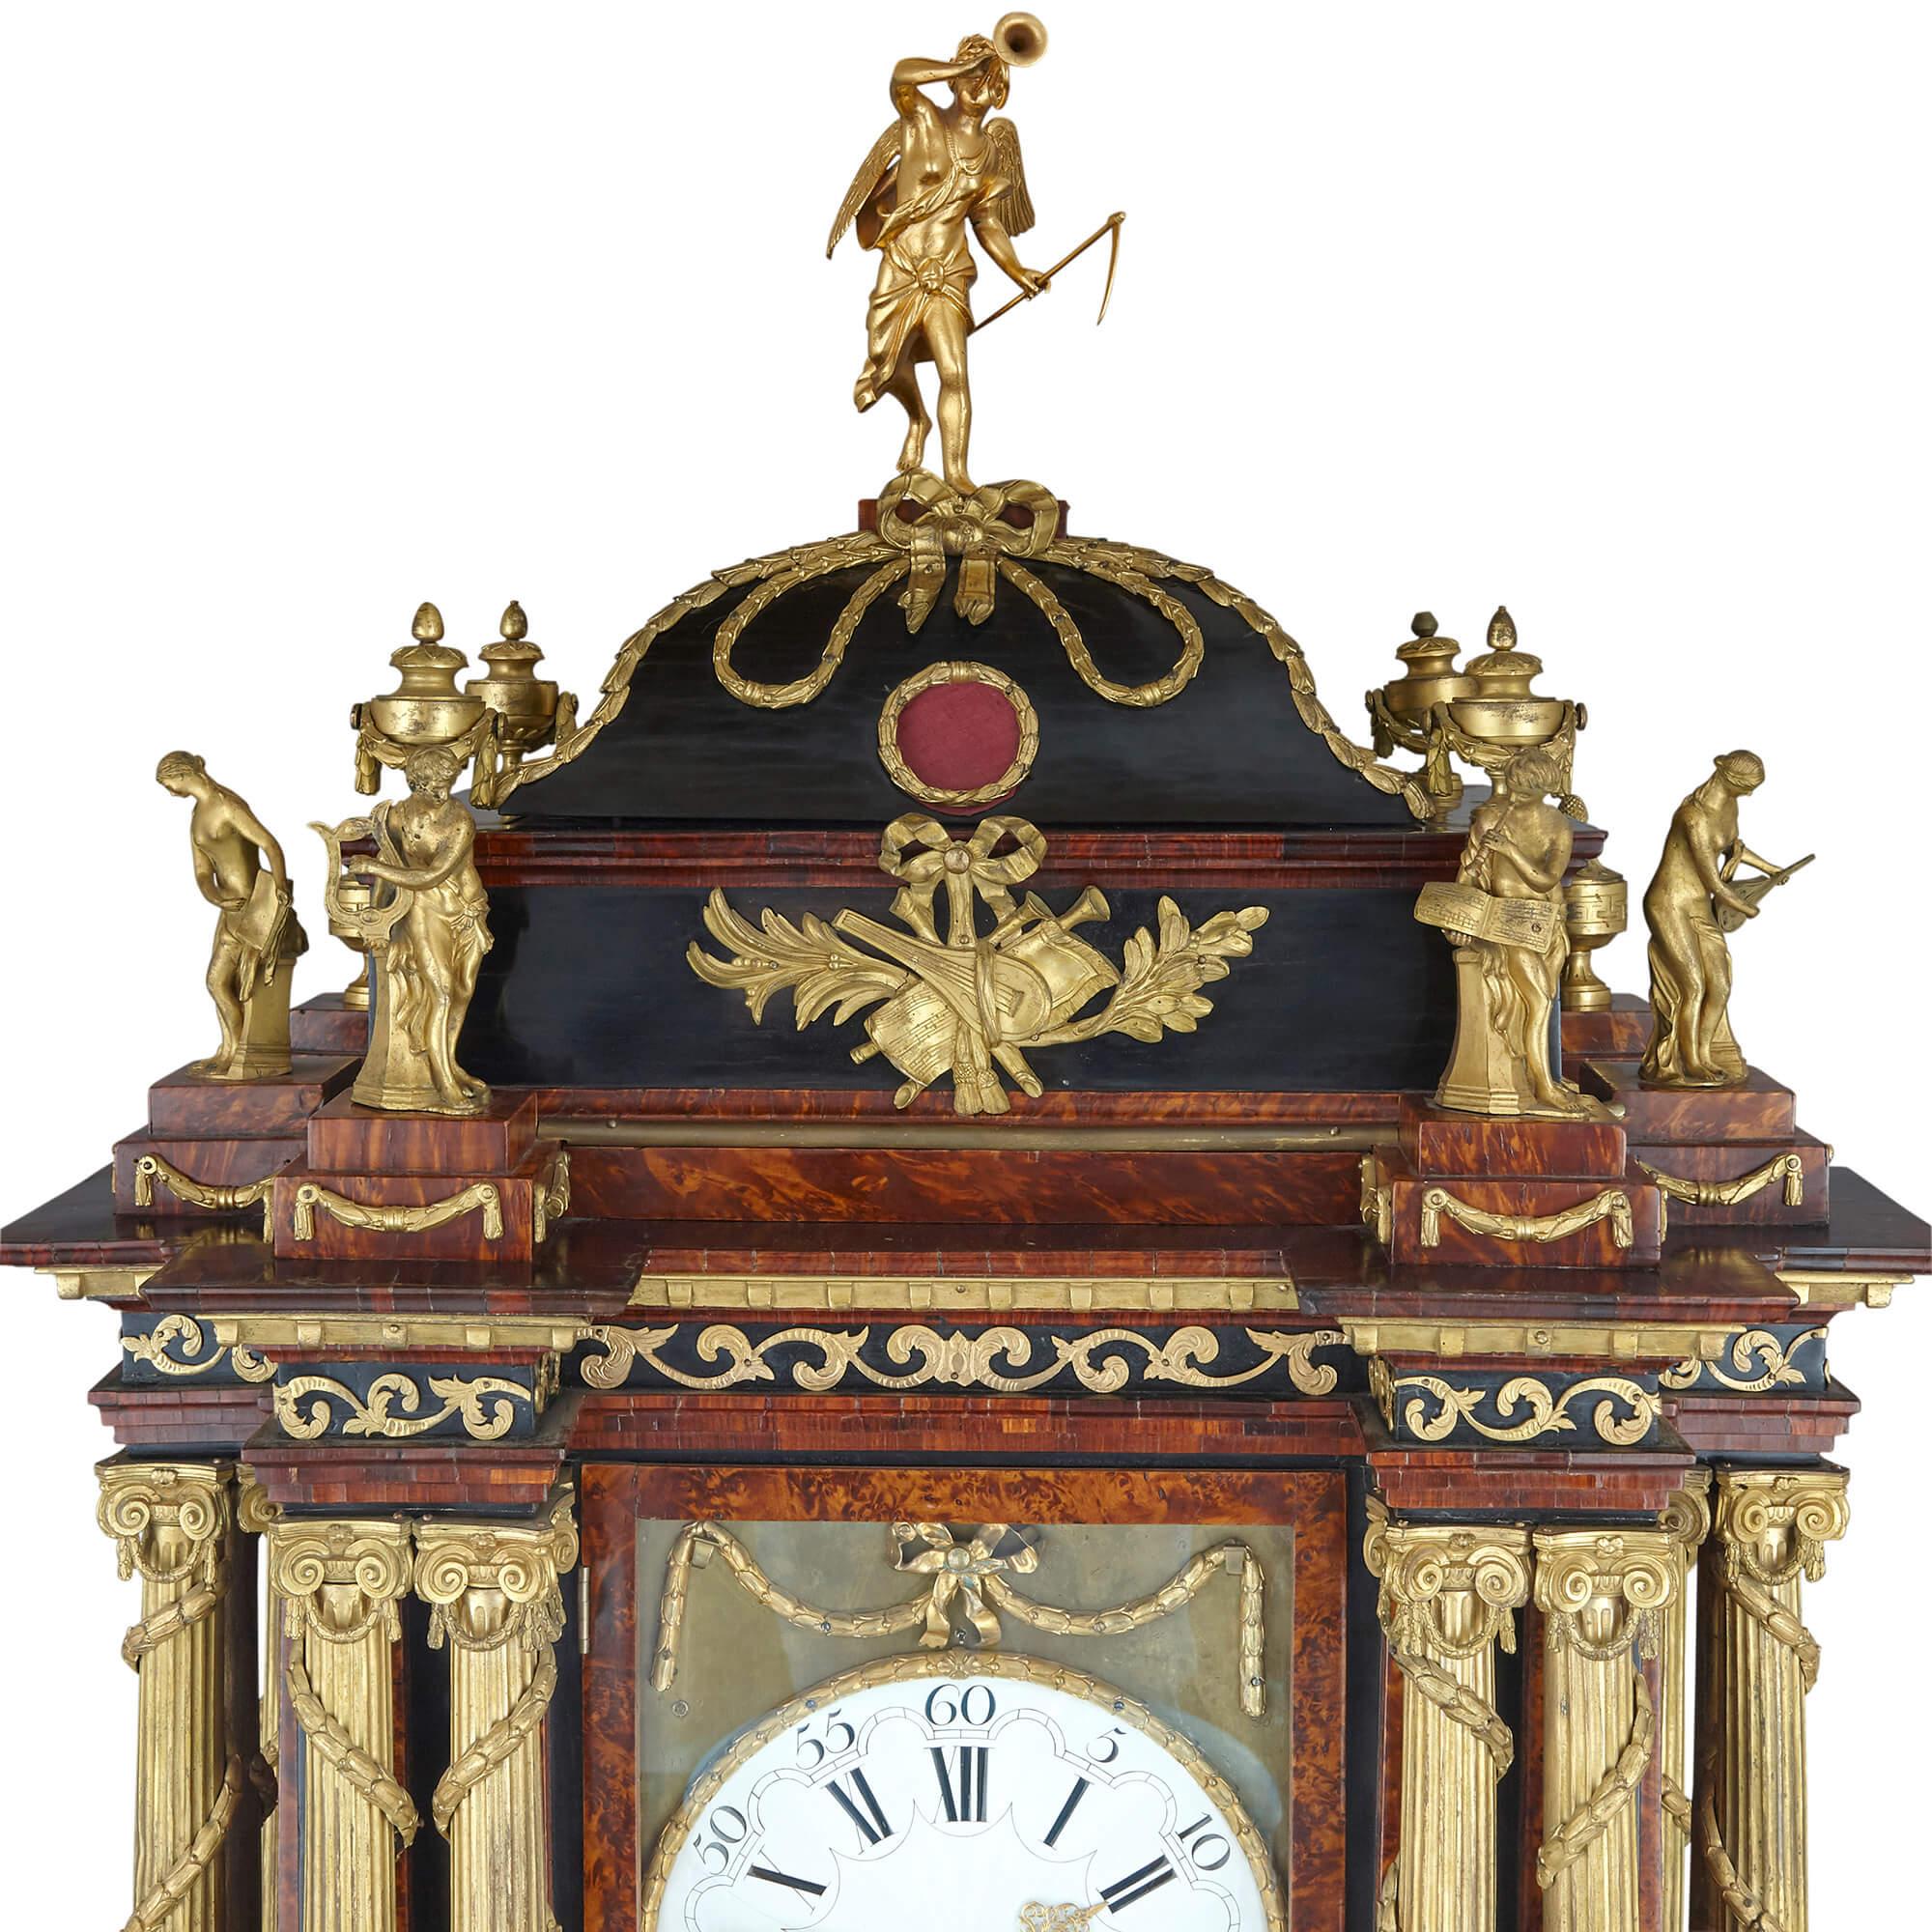 Baroque Grande horloge musicale autrichienne de style baroque montée en bronze doré en vente